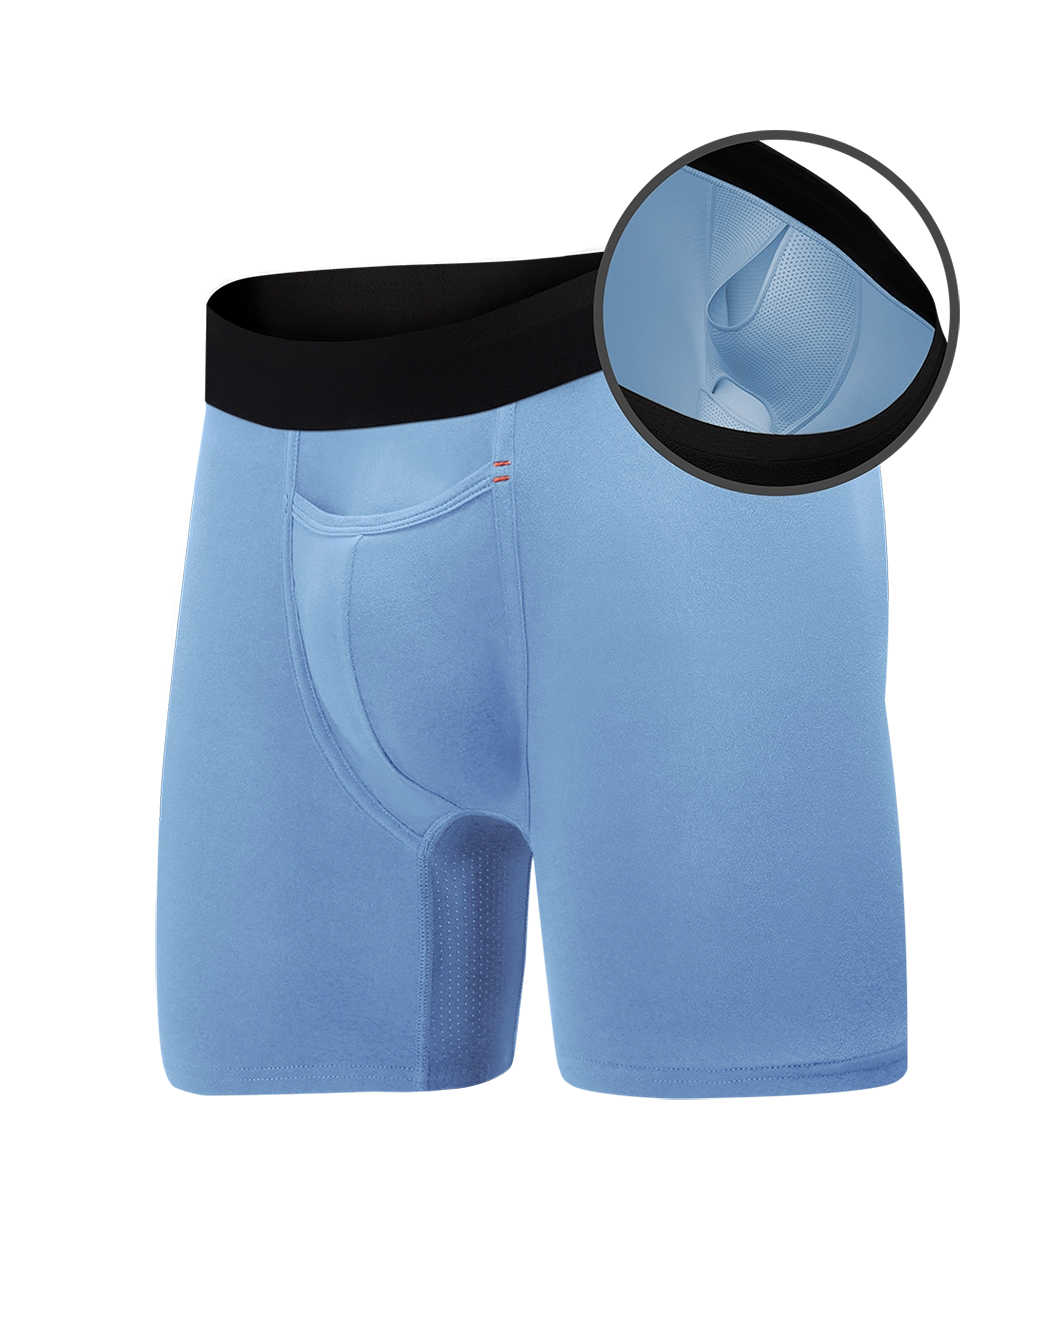 LUEXBOX 4 Packs Pocket Underwear for Men with Secret India